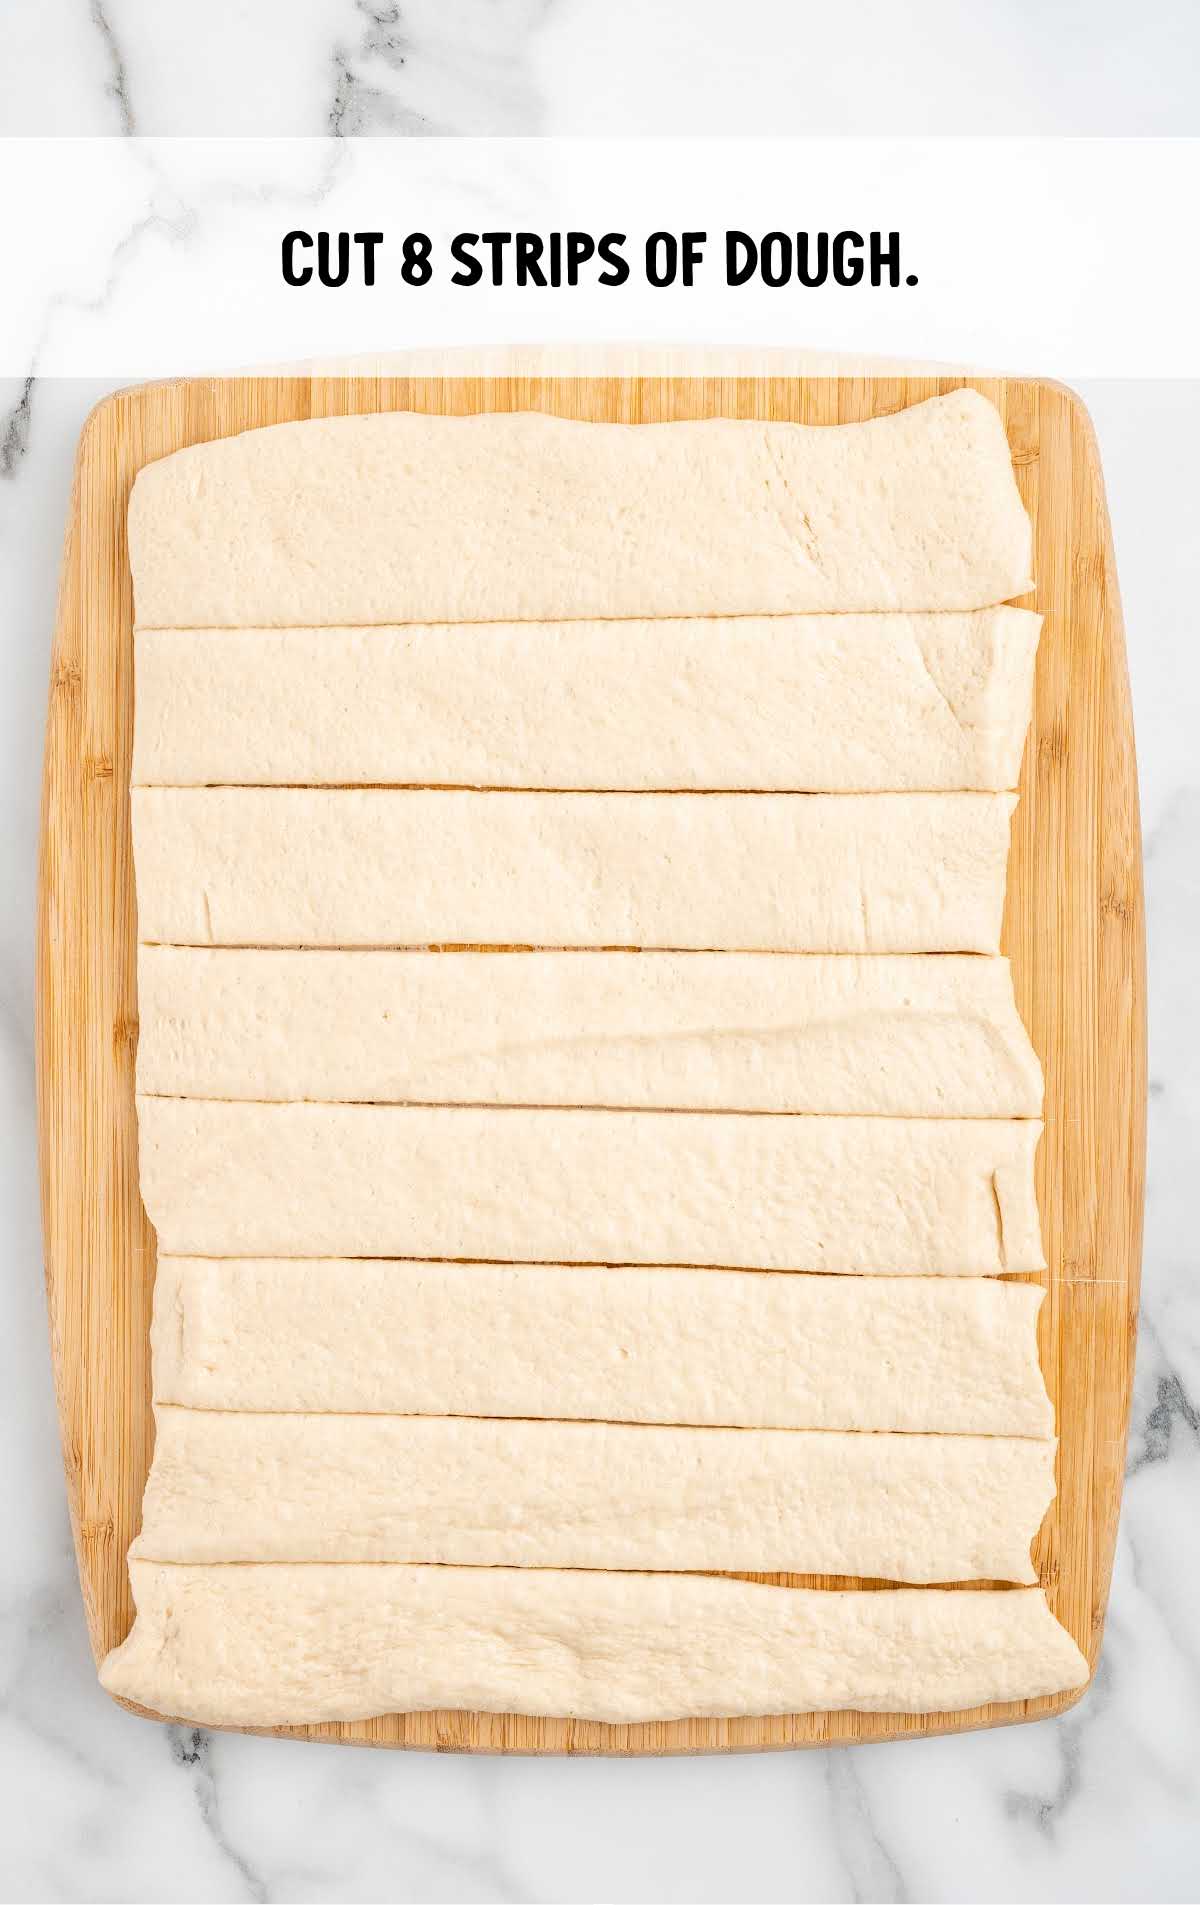 strips of dough cut on a wooden board